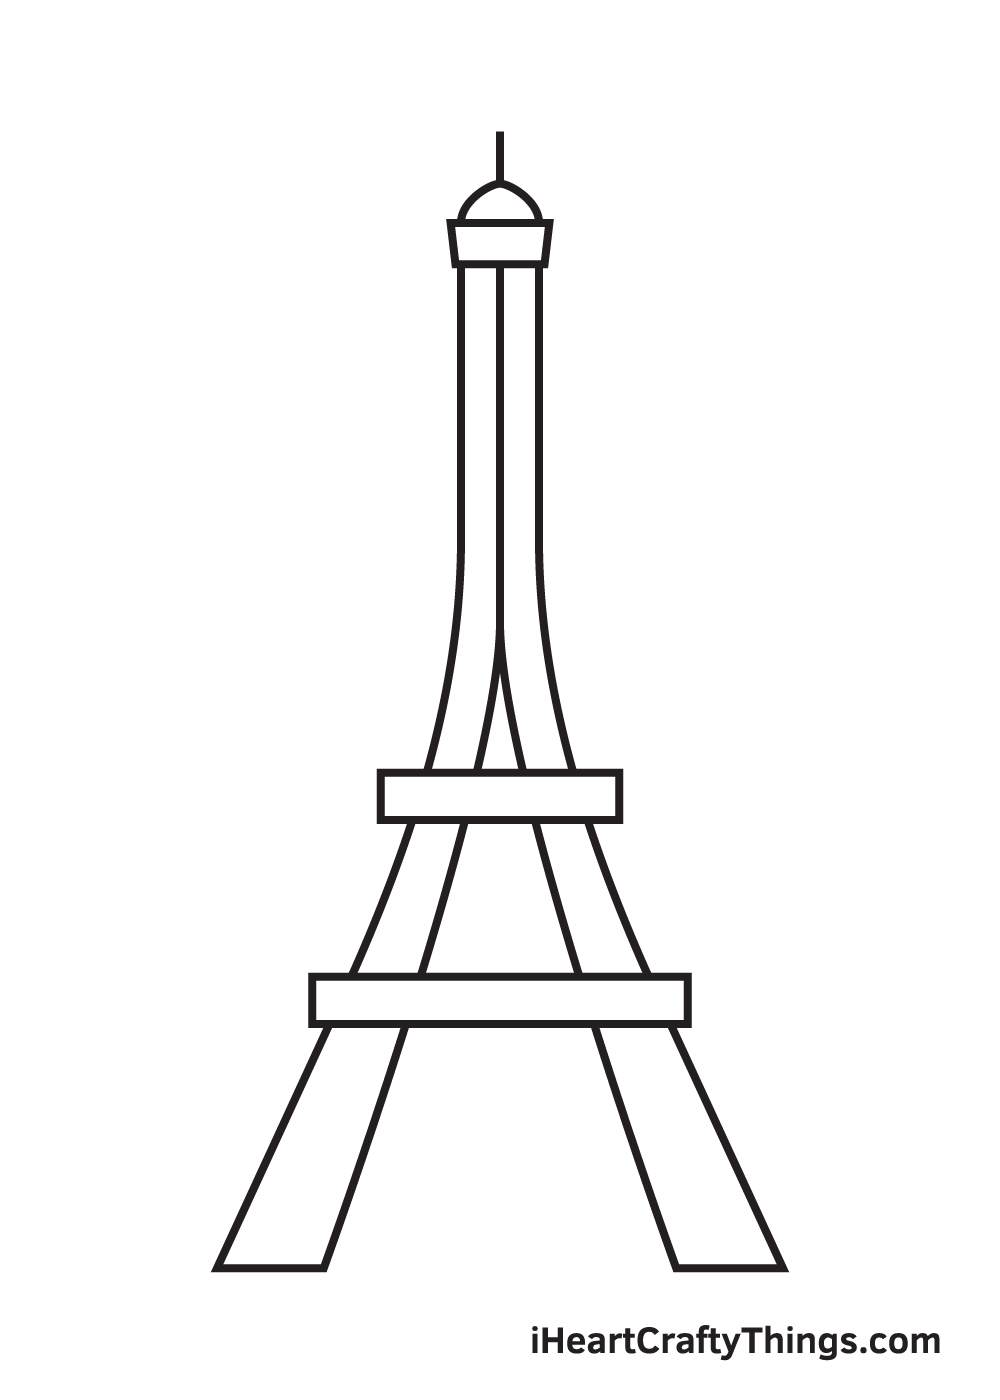 Eiffel Tower drawing - step 5